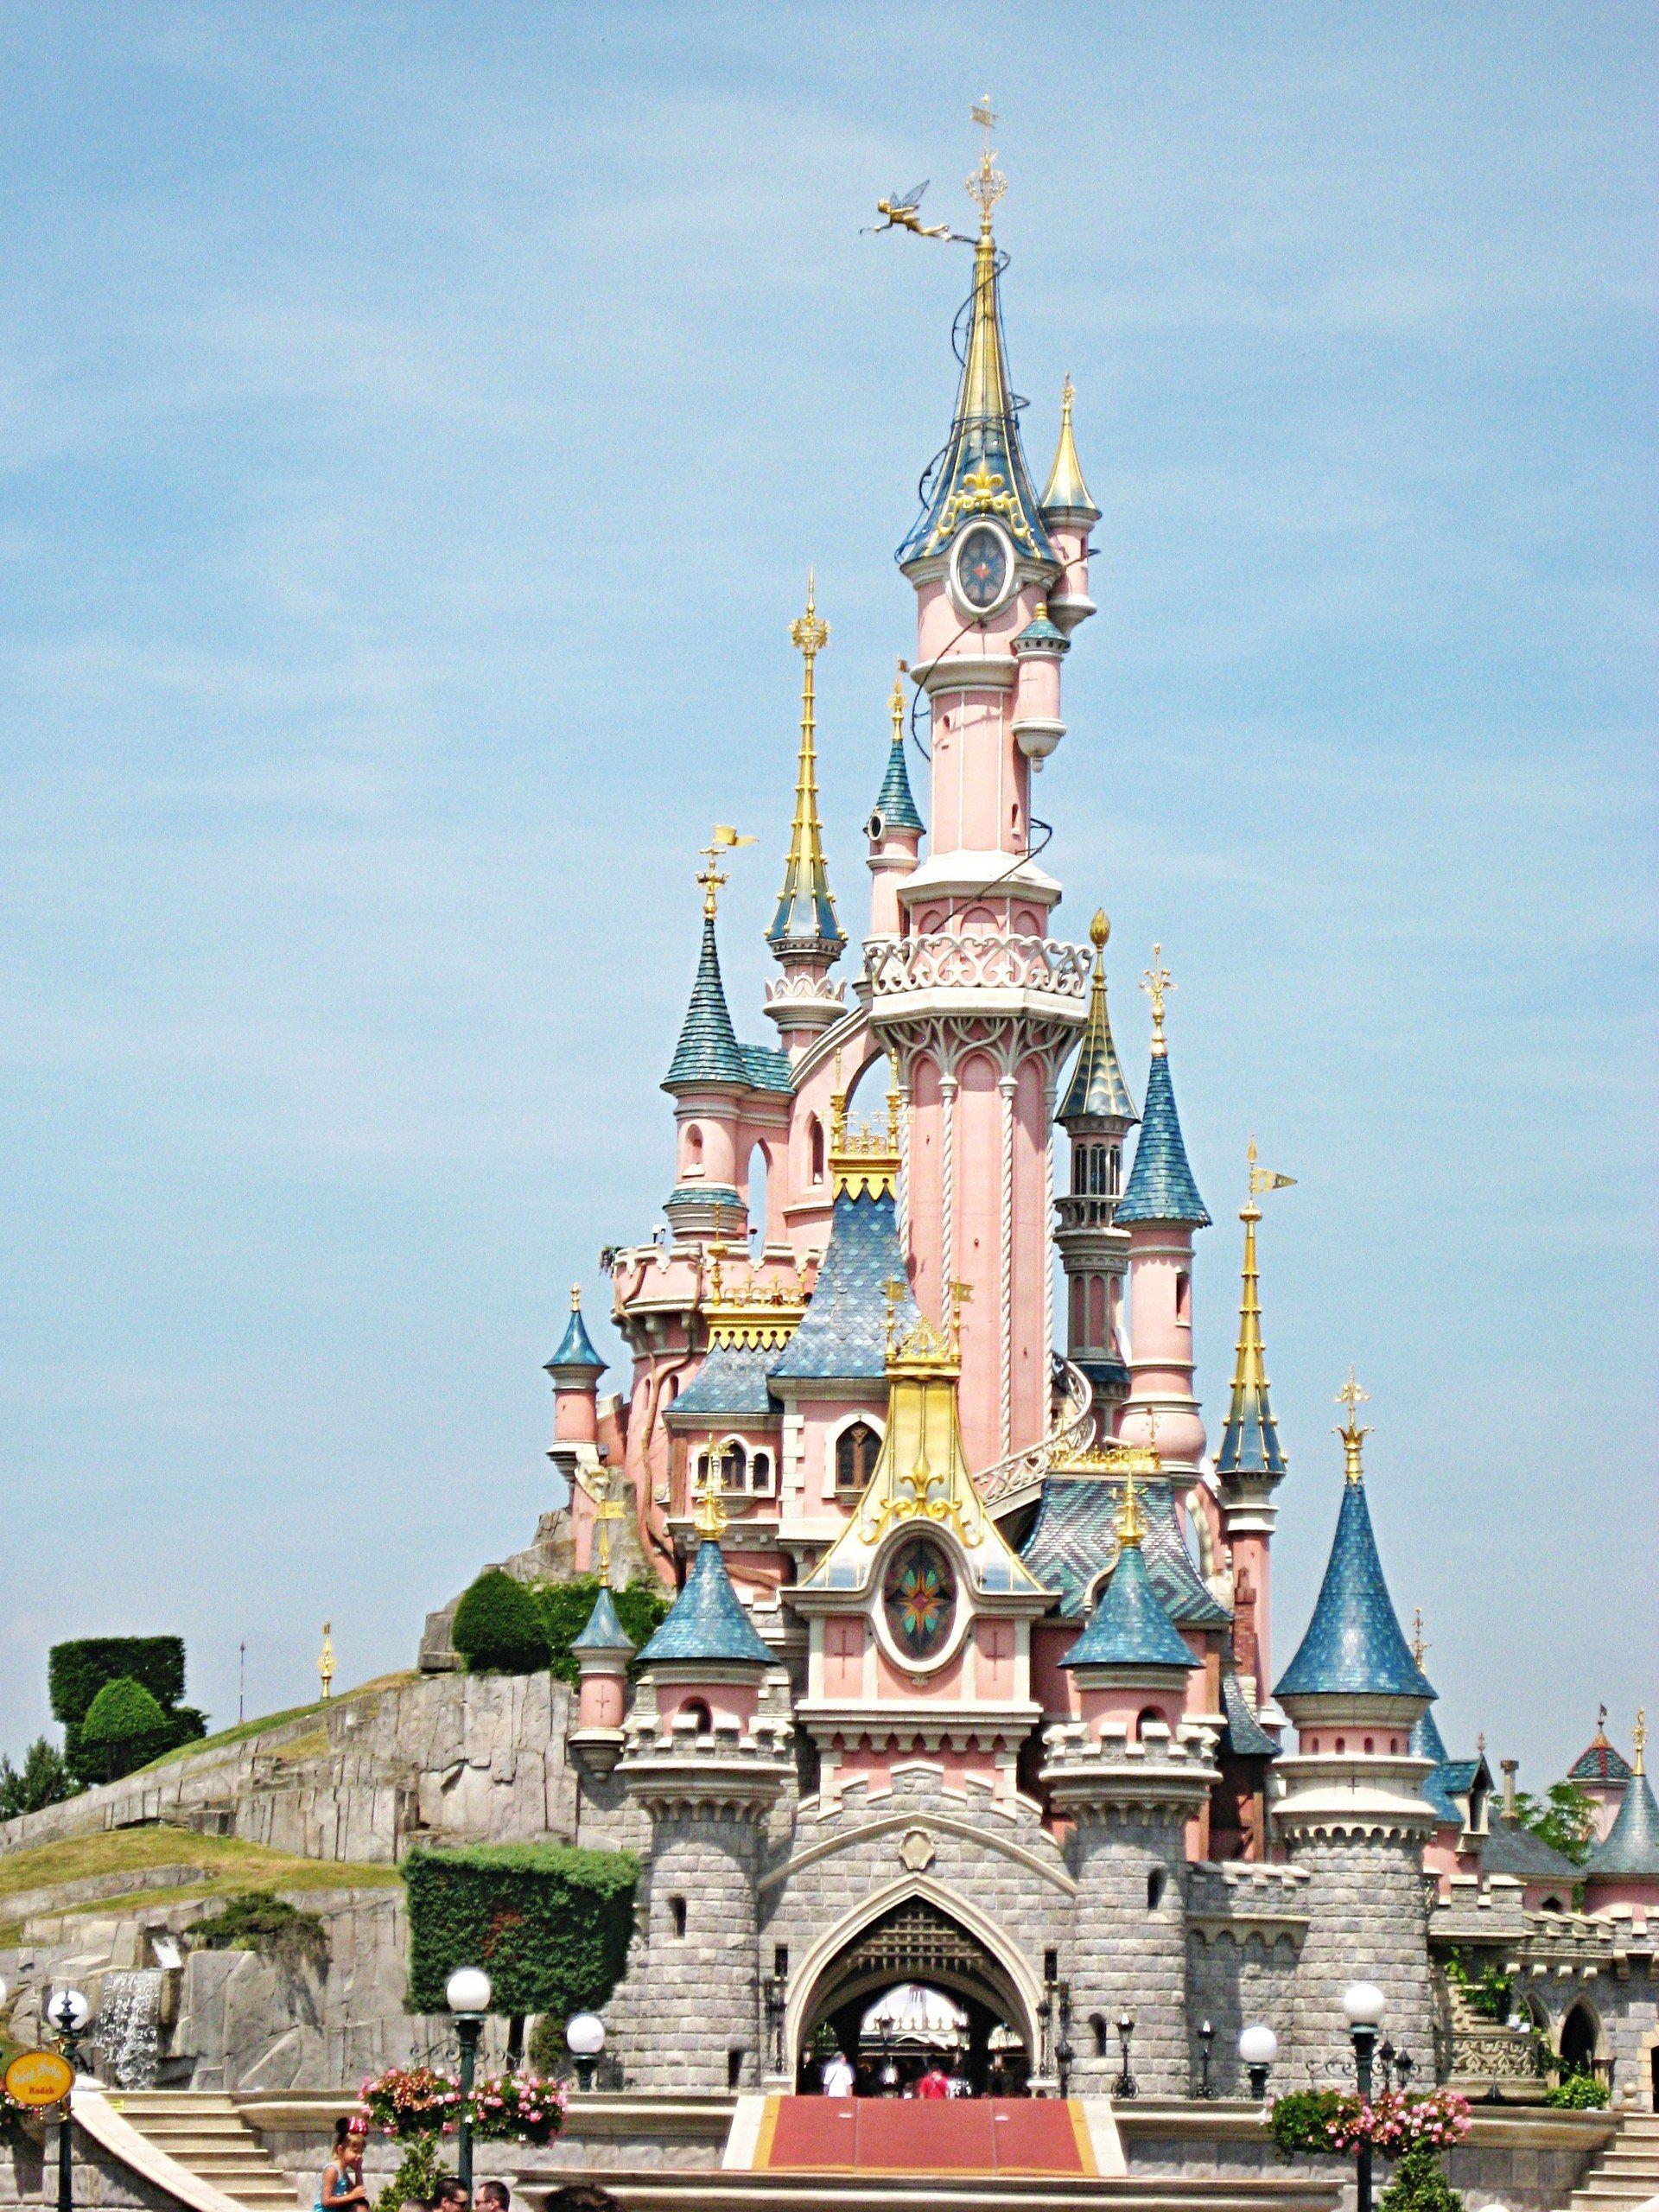 Disney Tangled Castle France. The Sleeping Beauty Castle